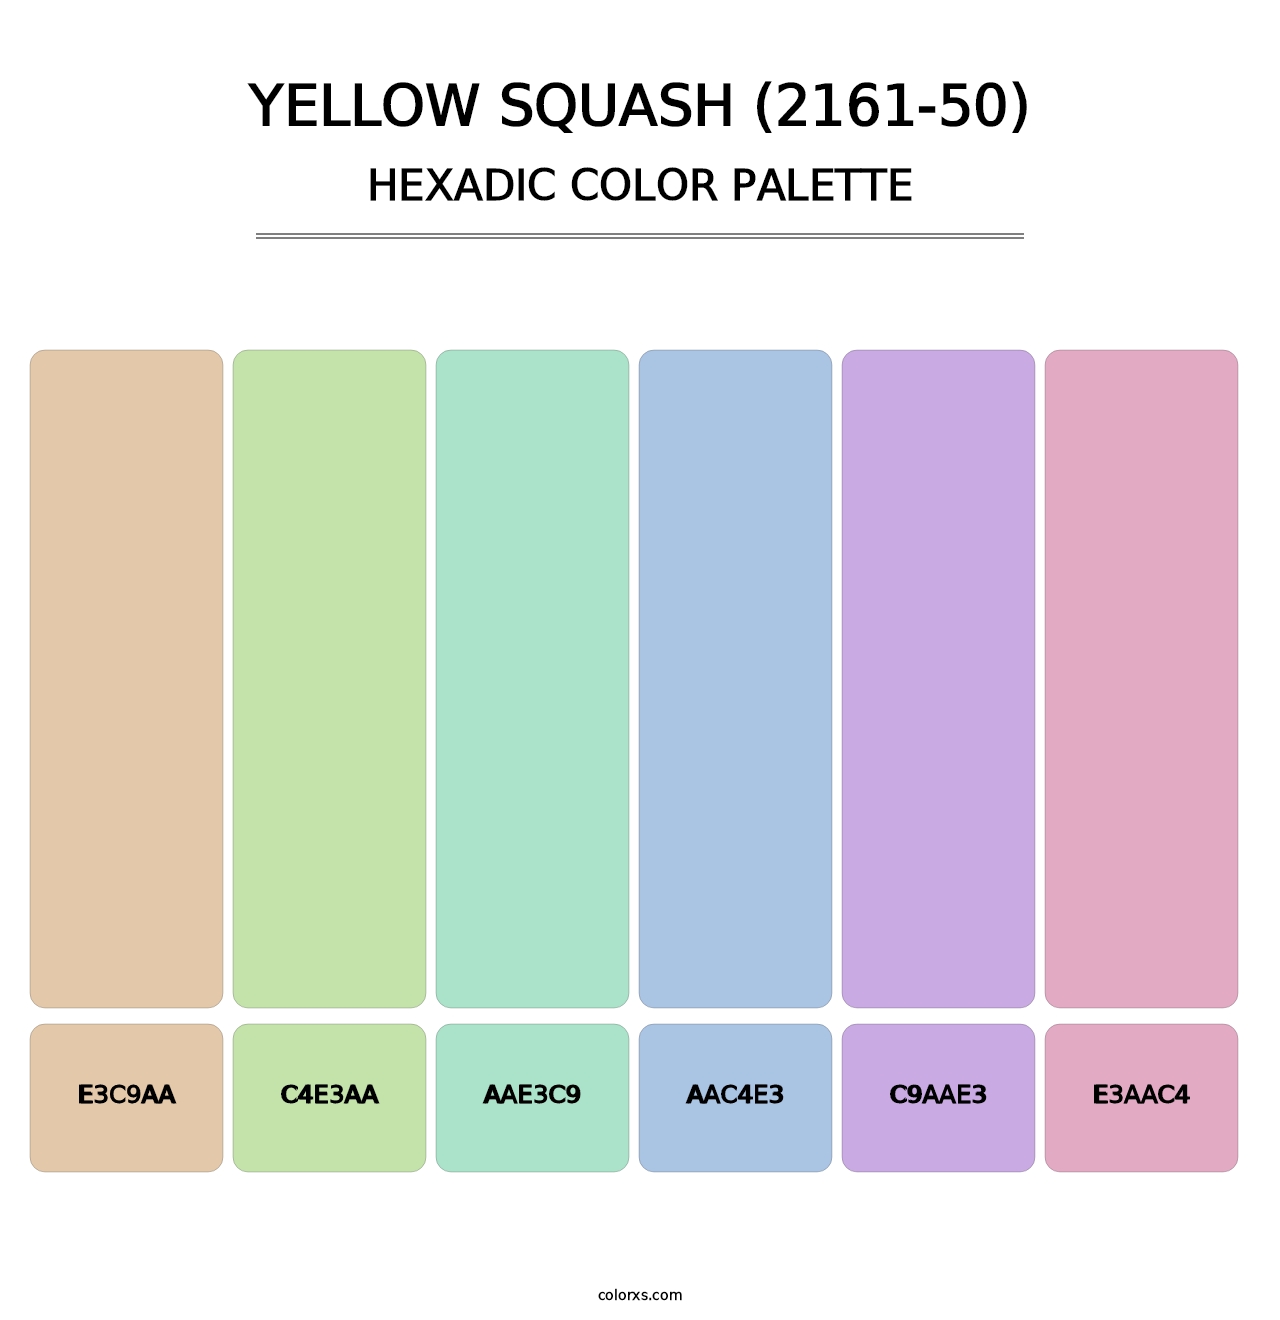 Yellow Squash (2161-50) - Hexadic Color Palette